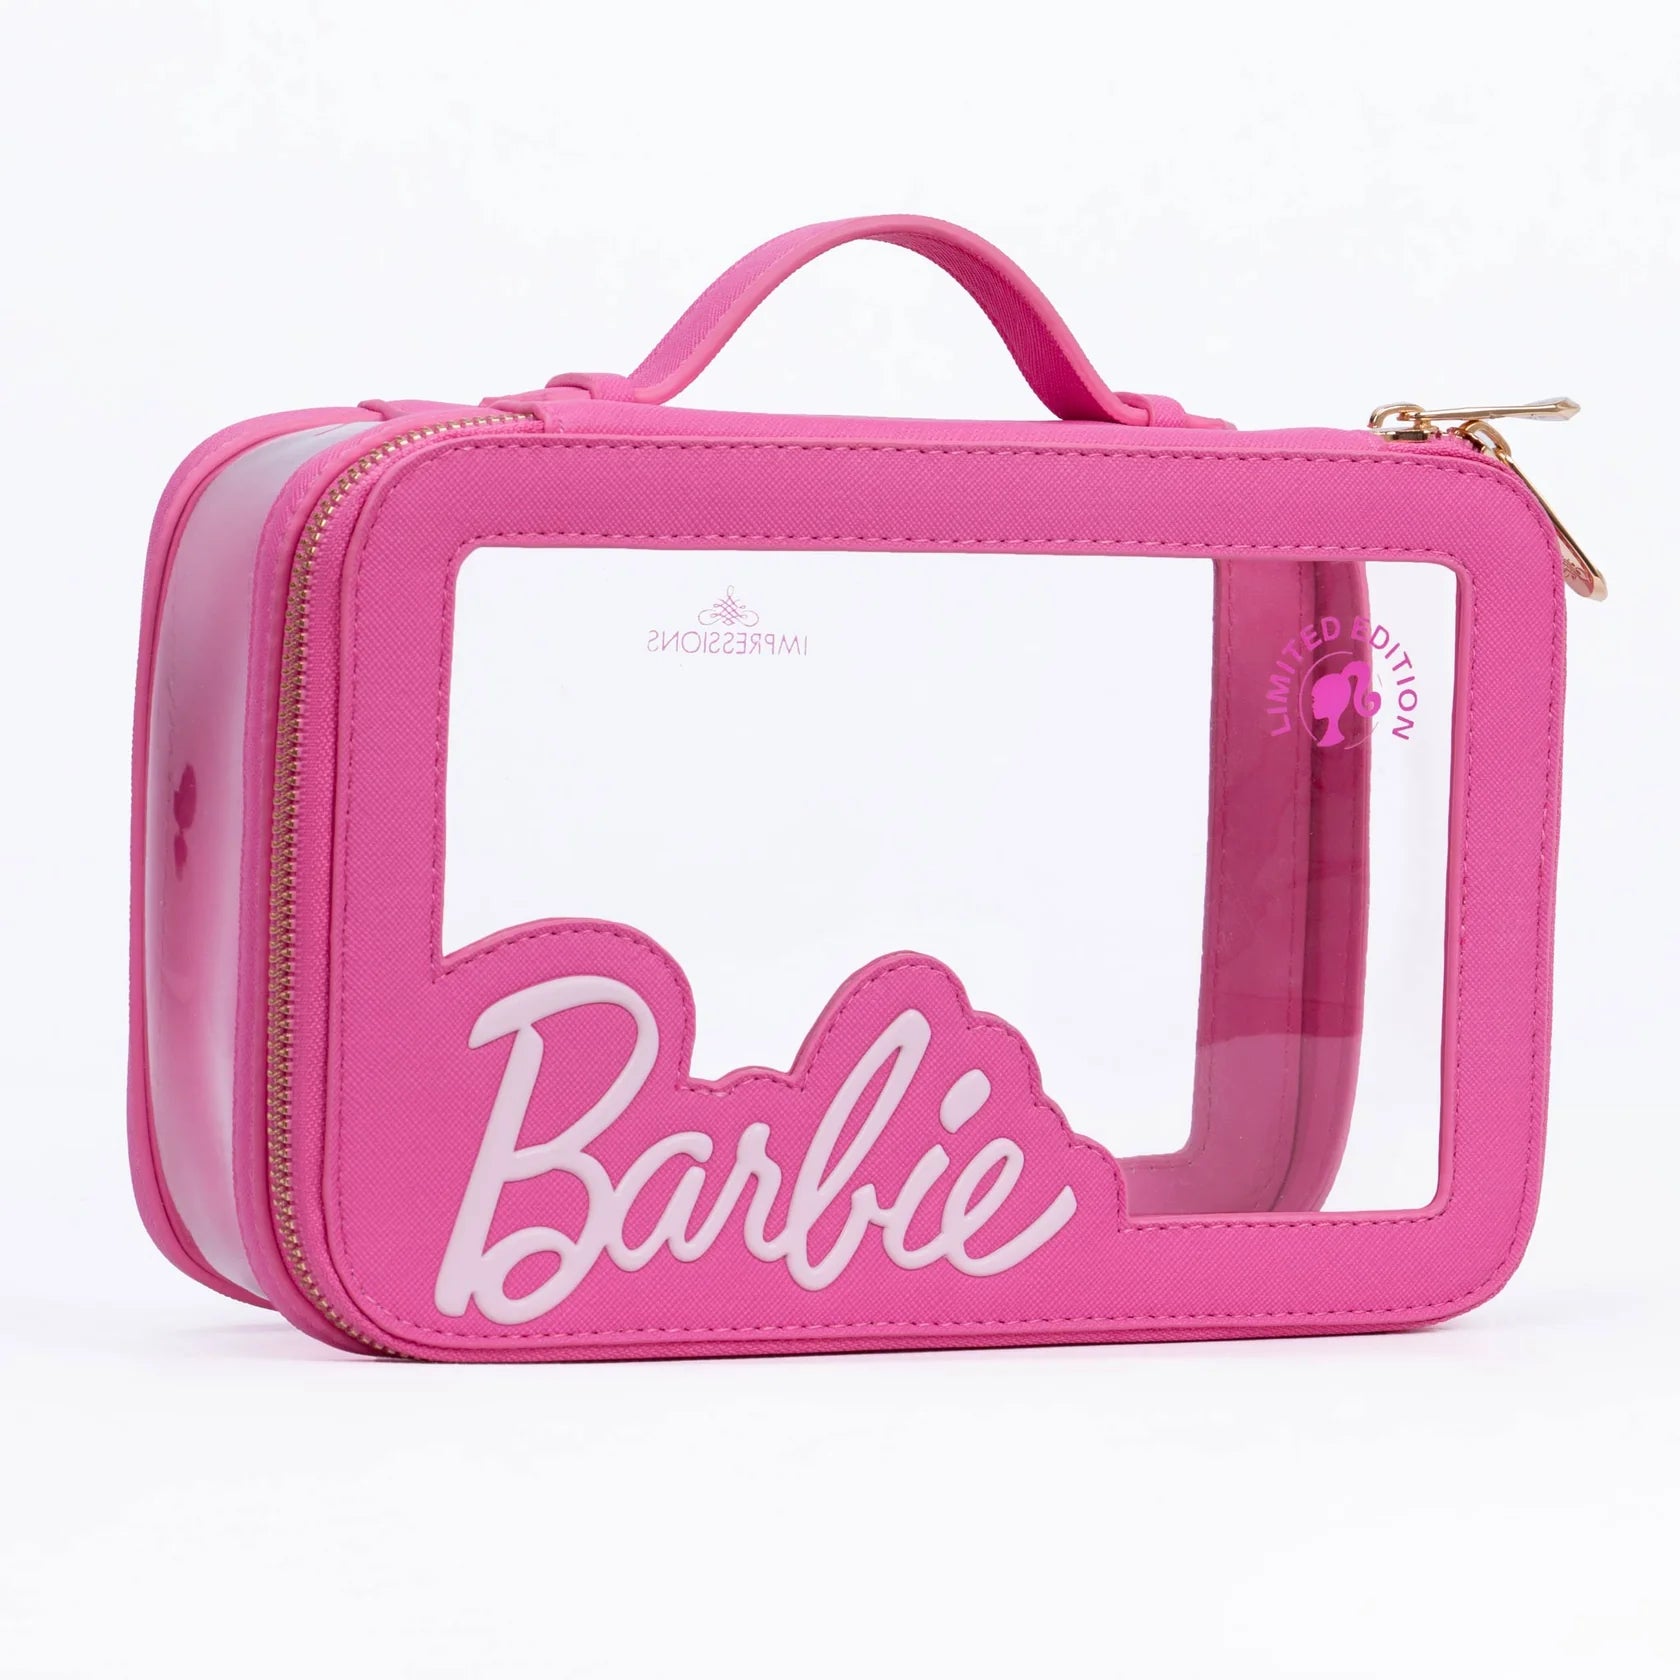 Barbie Makeup Carry Case